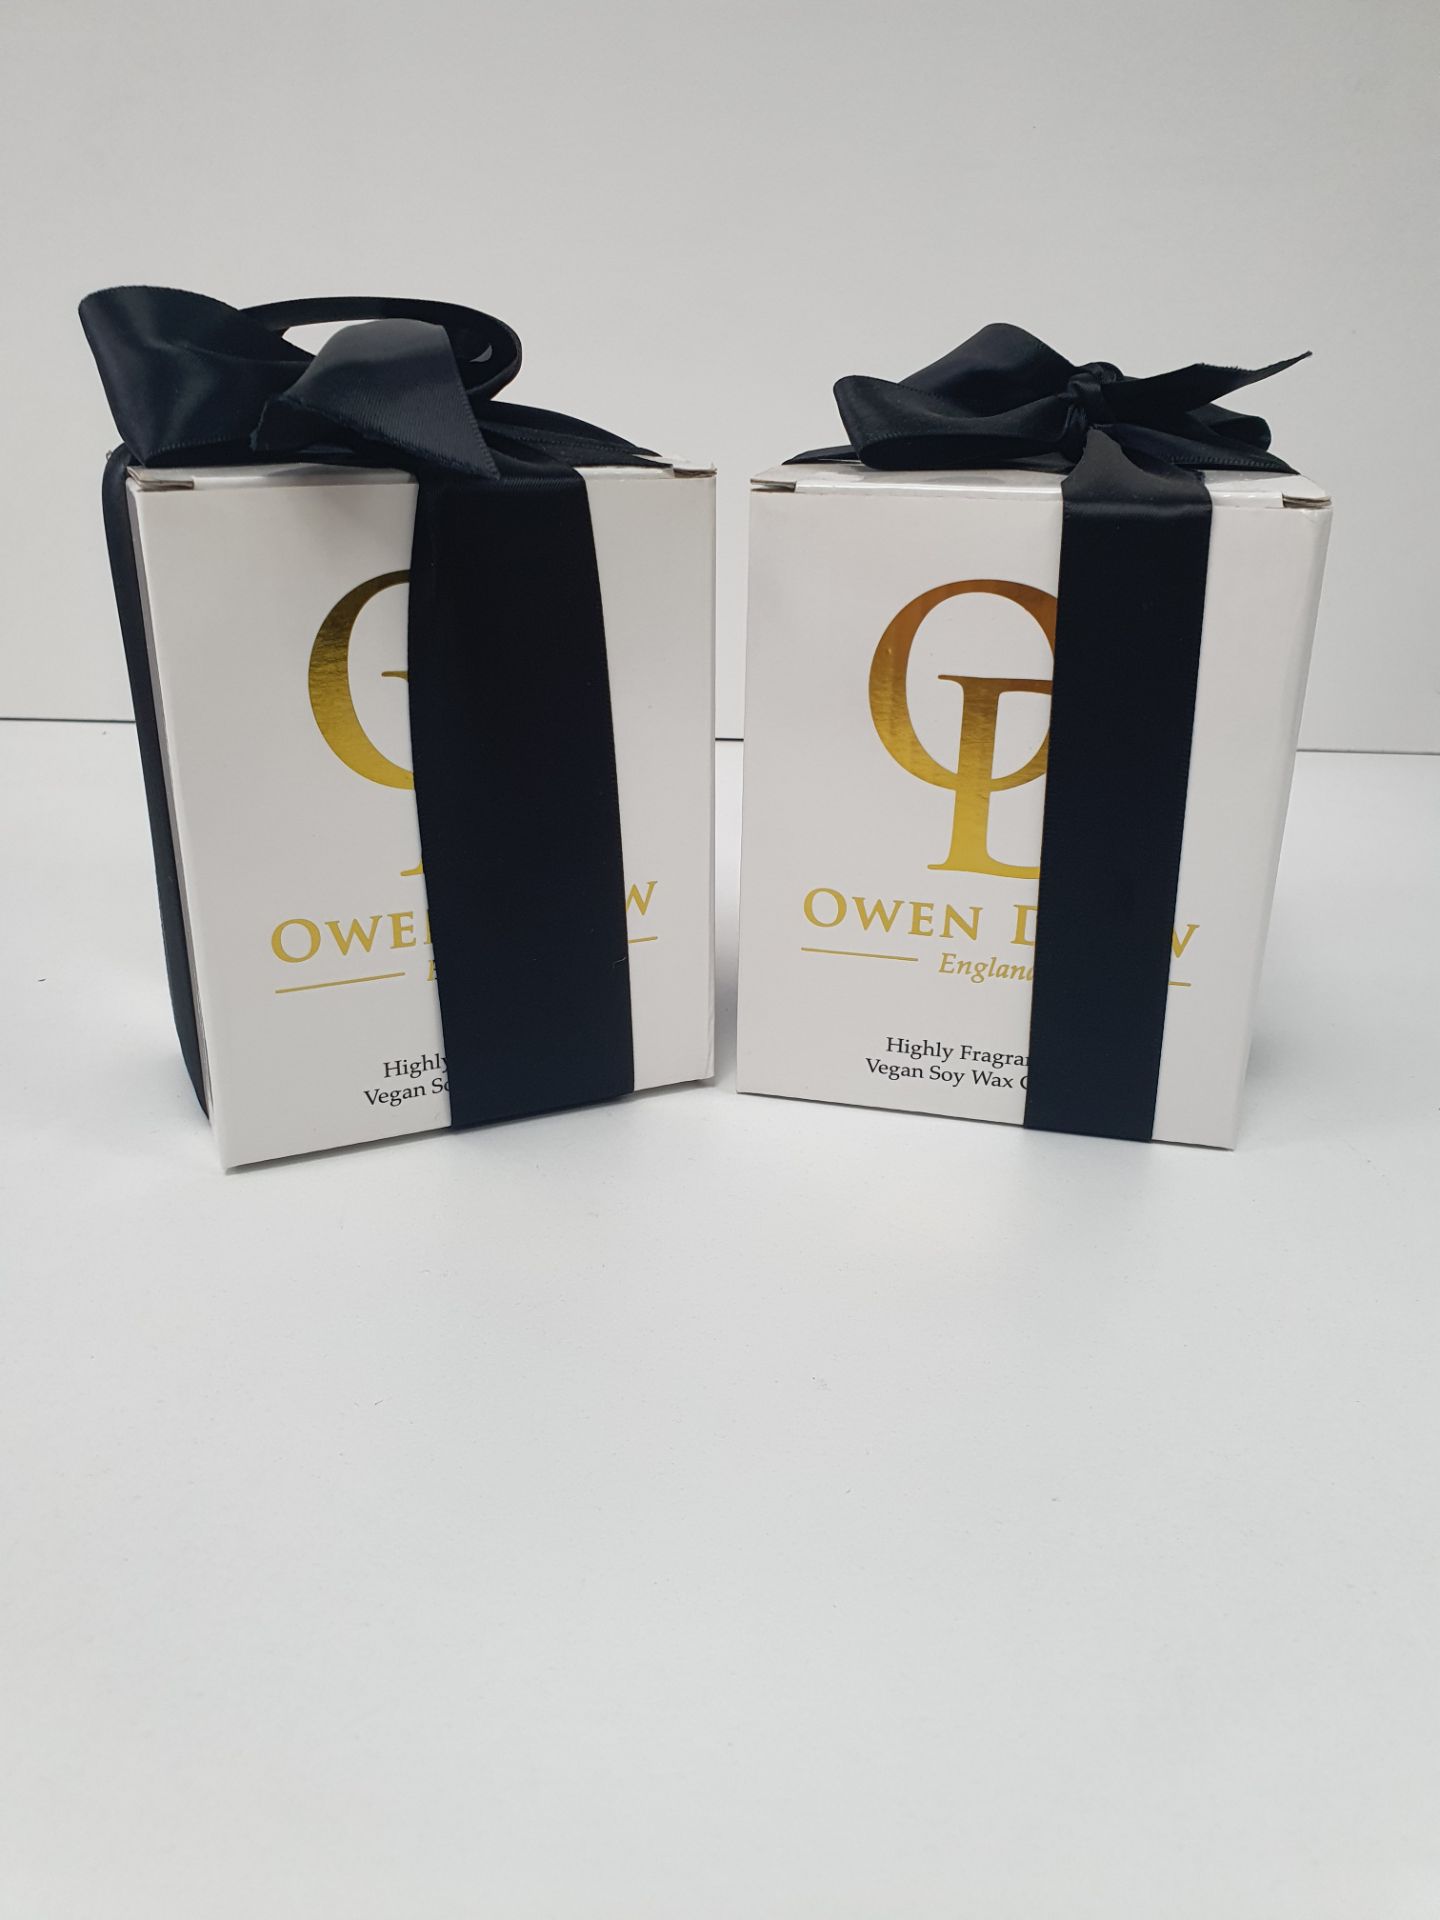 2 x Owen Drew Vegan Soy Wax Candles | RRP £40.00 - Image 2 of 2